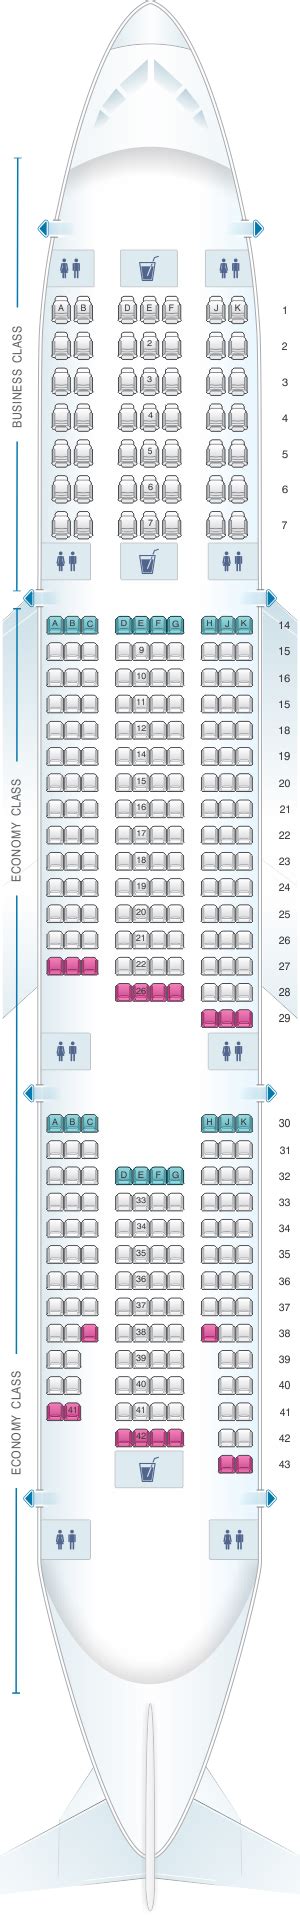 Seat Map Emirates Boeing B777 200lr V2 Seatmaestro